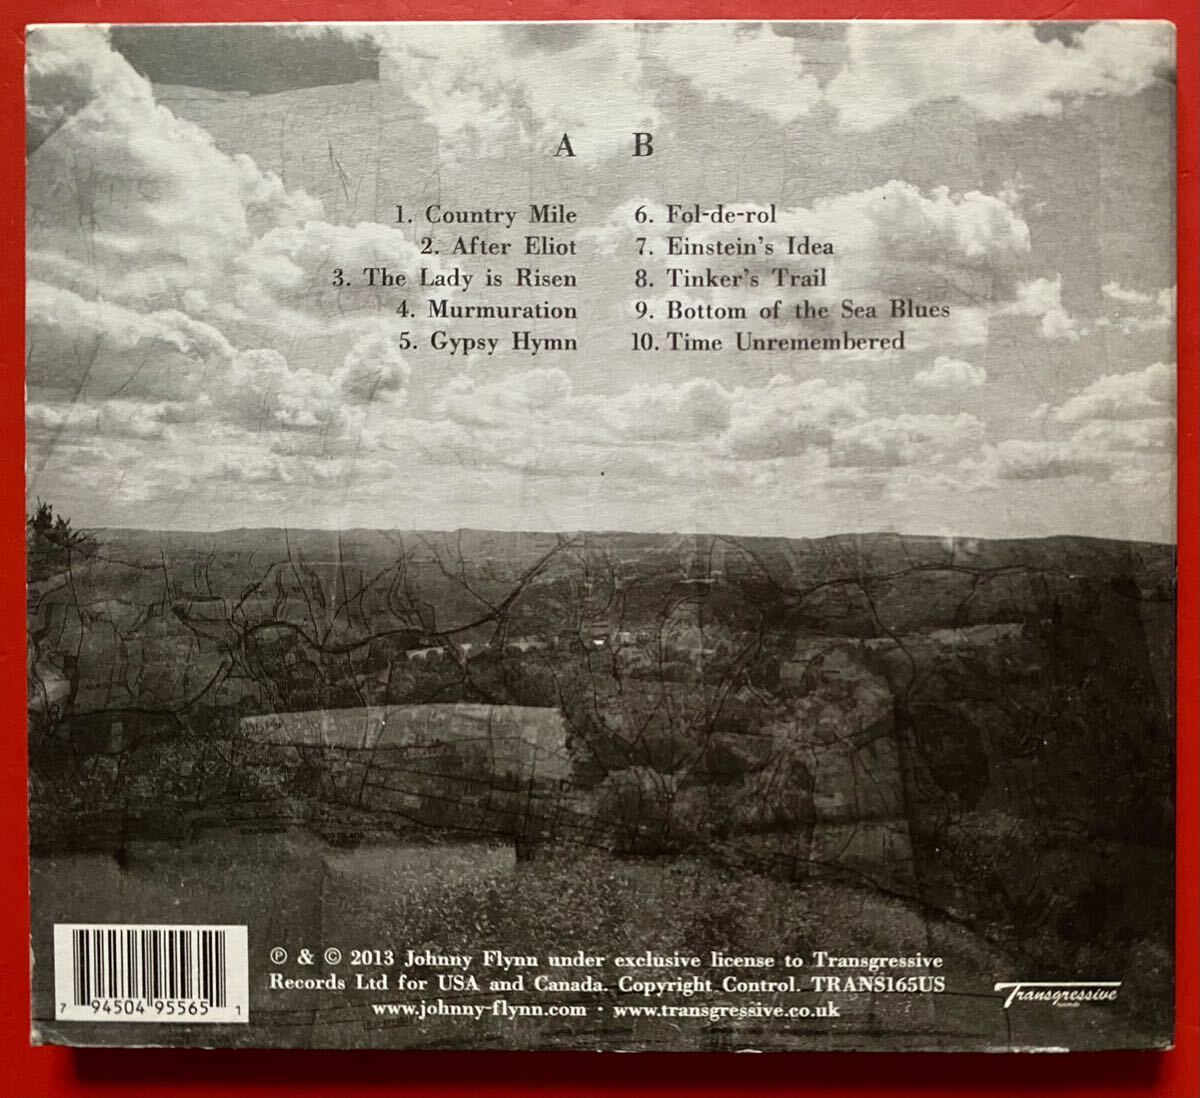 【CD】ジョニー・フリン「Country Mile」Johnny Flynn 輸入盤 [04050100]_画像2